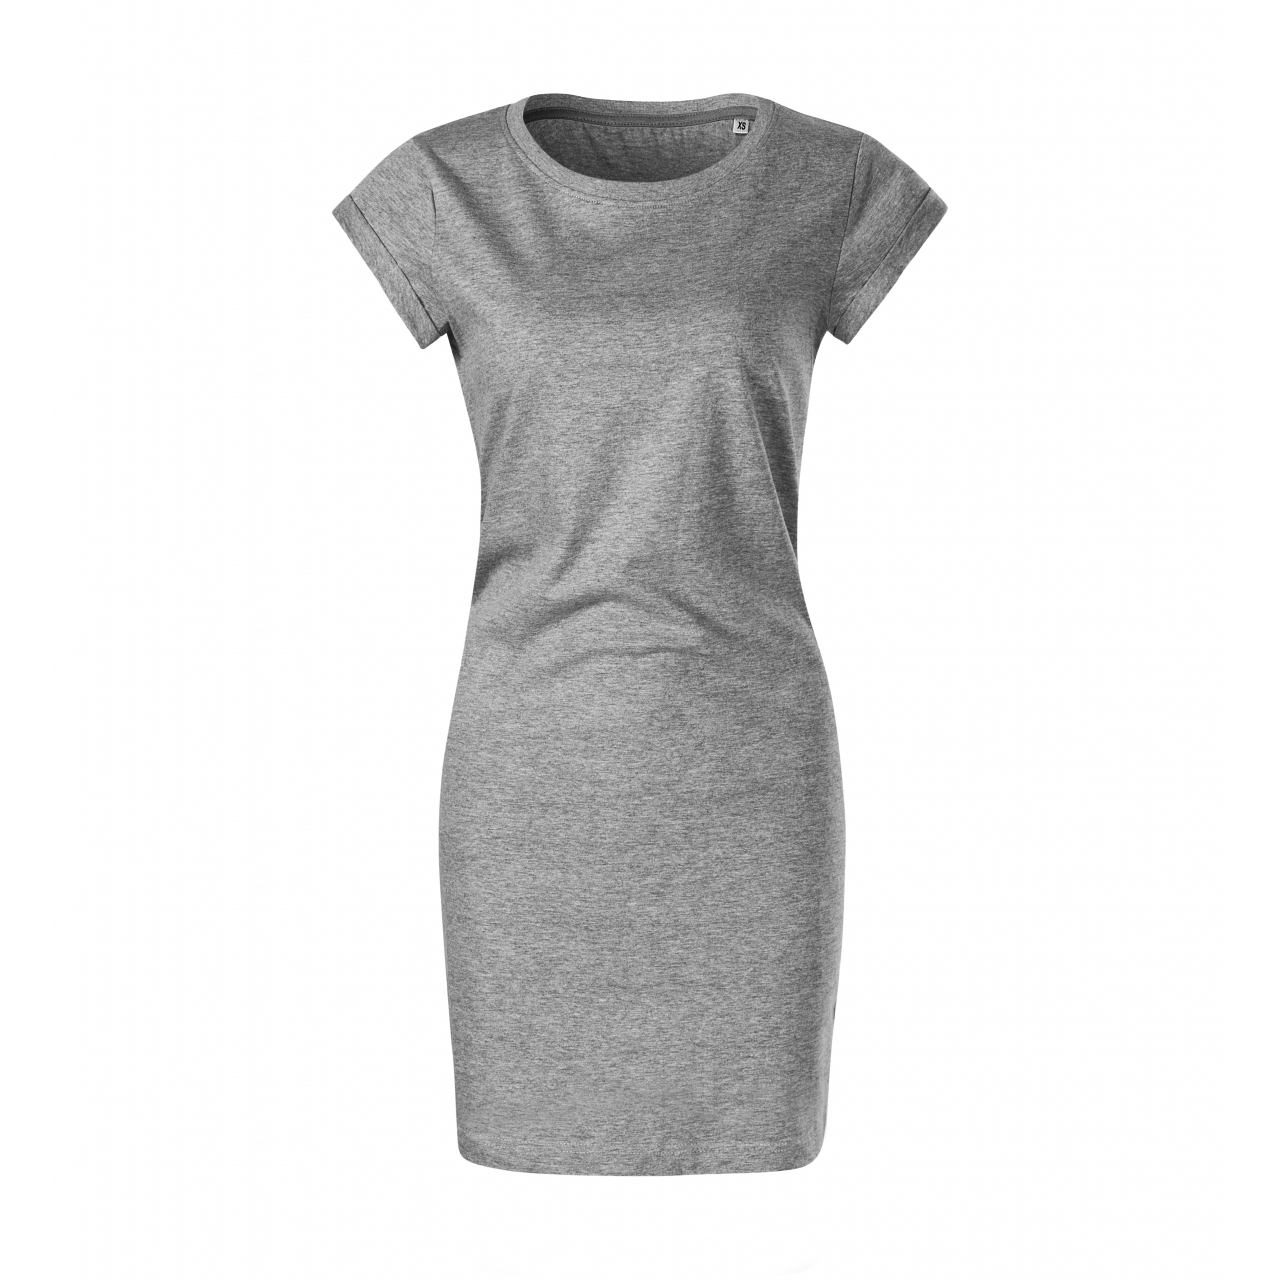 Šaty dámské Malfini Freedom - šedé, XXL